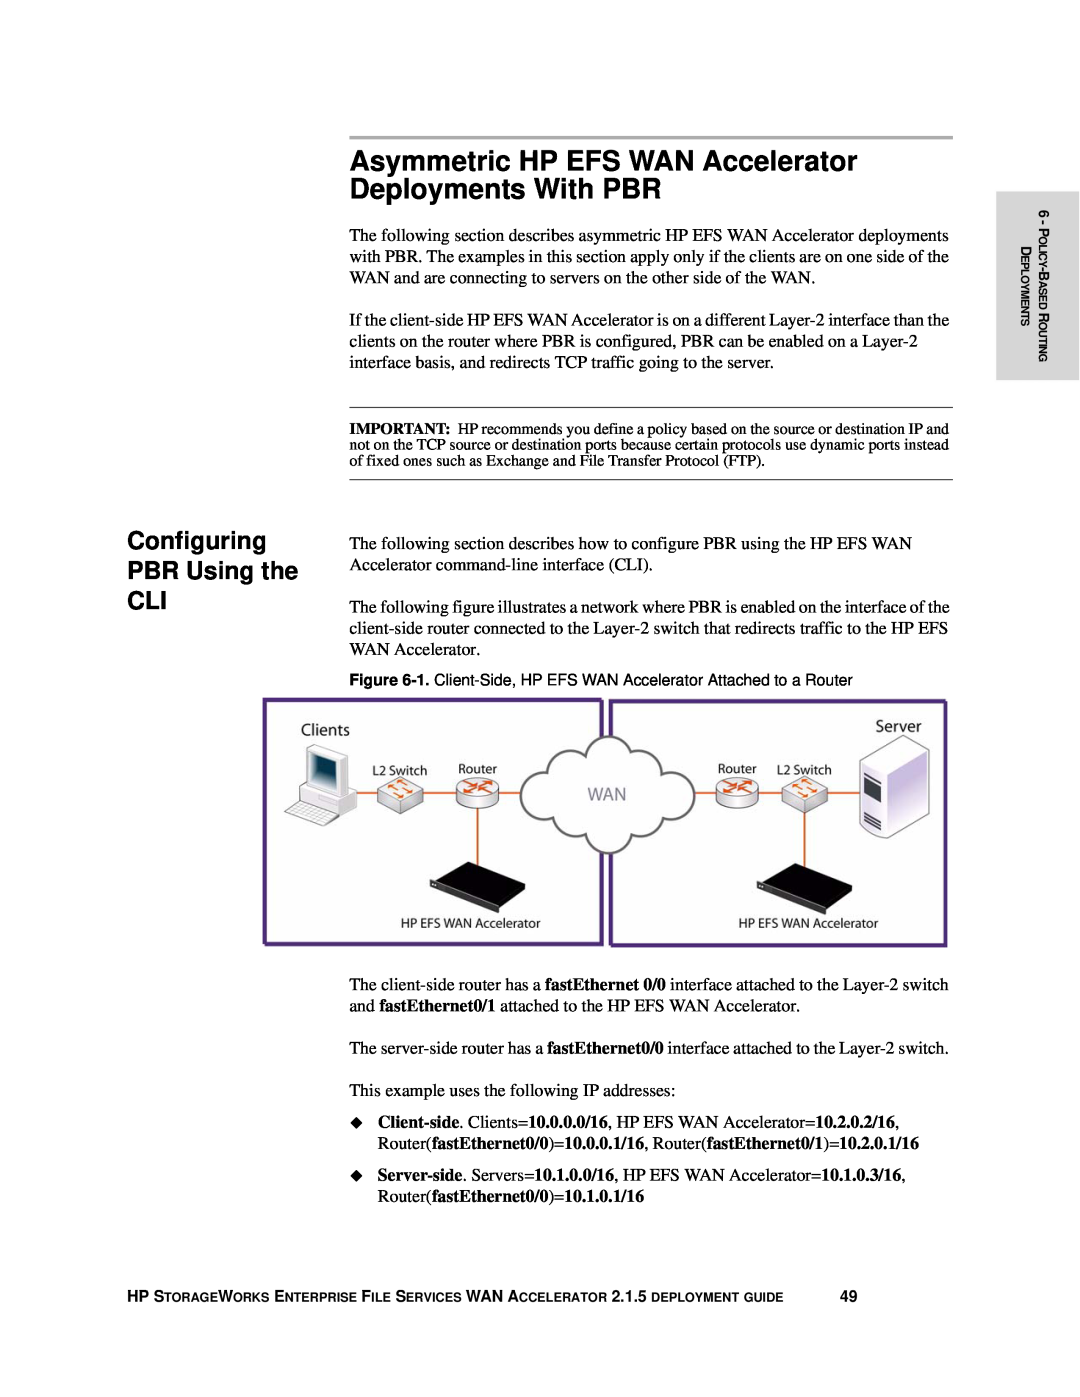 HP Enterprise File Services WAN Accelerator manual Asymmetric HP EFS WAN Accelerator Deployments With PBR 